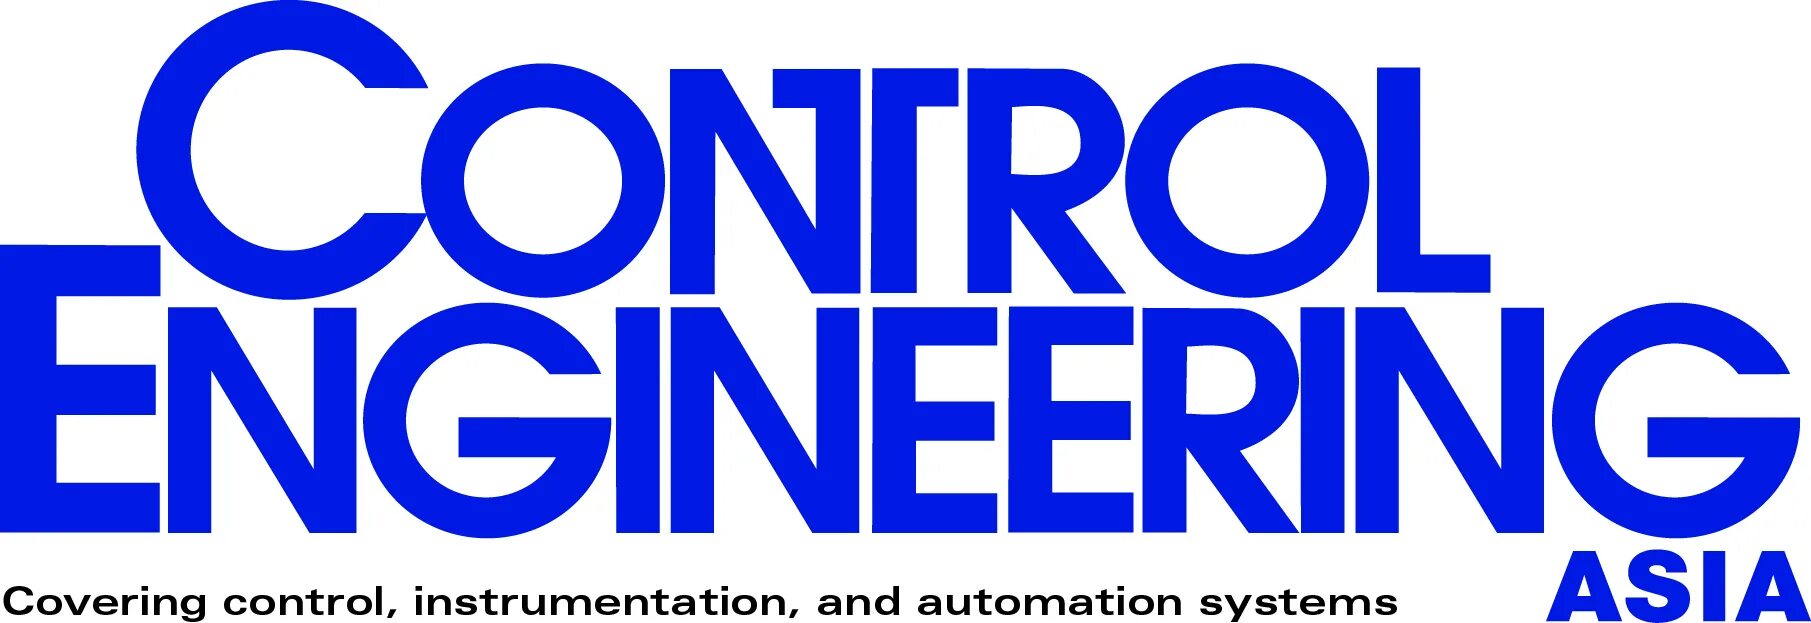 Controls россия. Control Engineering. Control логотип. Control Engineering Россия. Control Engineering Россия логотип.